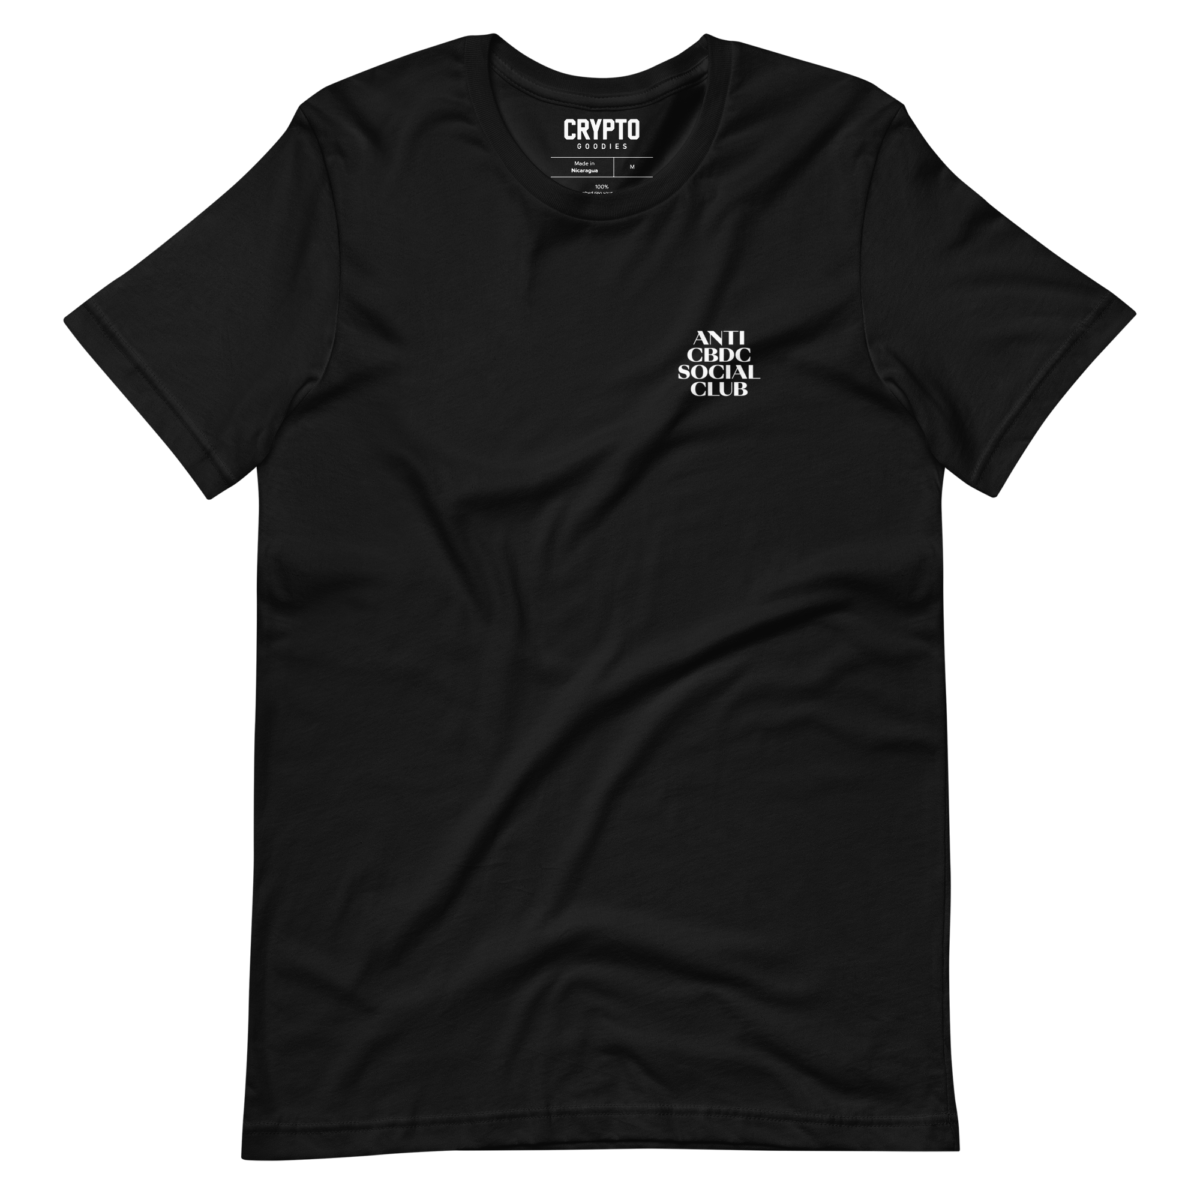 unisex staple t shirt black front 63305f4a1a0ef - Anti CBDC Social Club T-Shirt